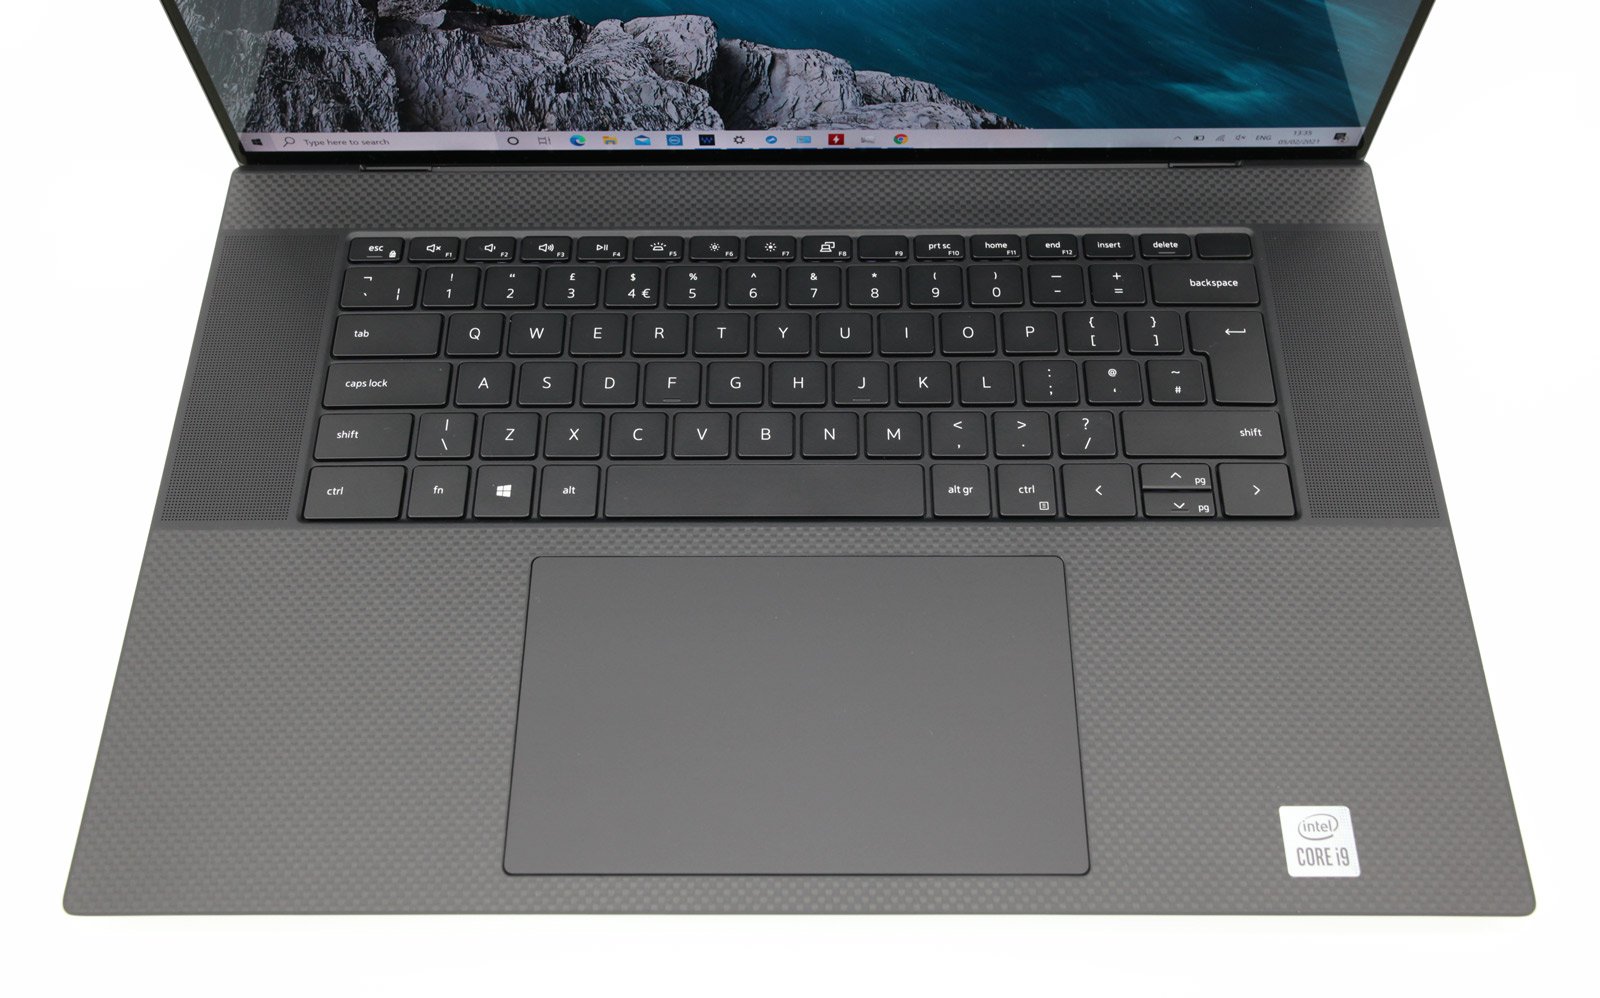 Dell XPS 17 9700 4K Laptop: Core i9, RTX 2060, 16GB RAM, 1TB SSD, Warranty, VAT - CruiseTech